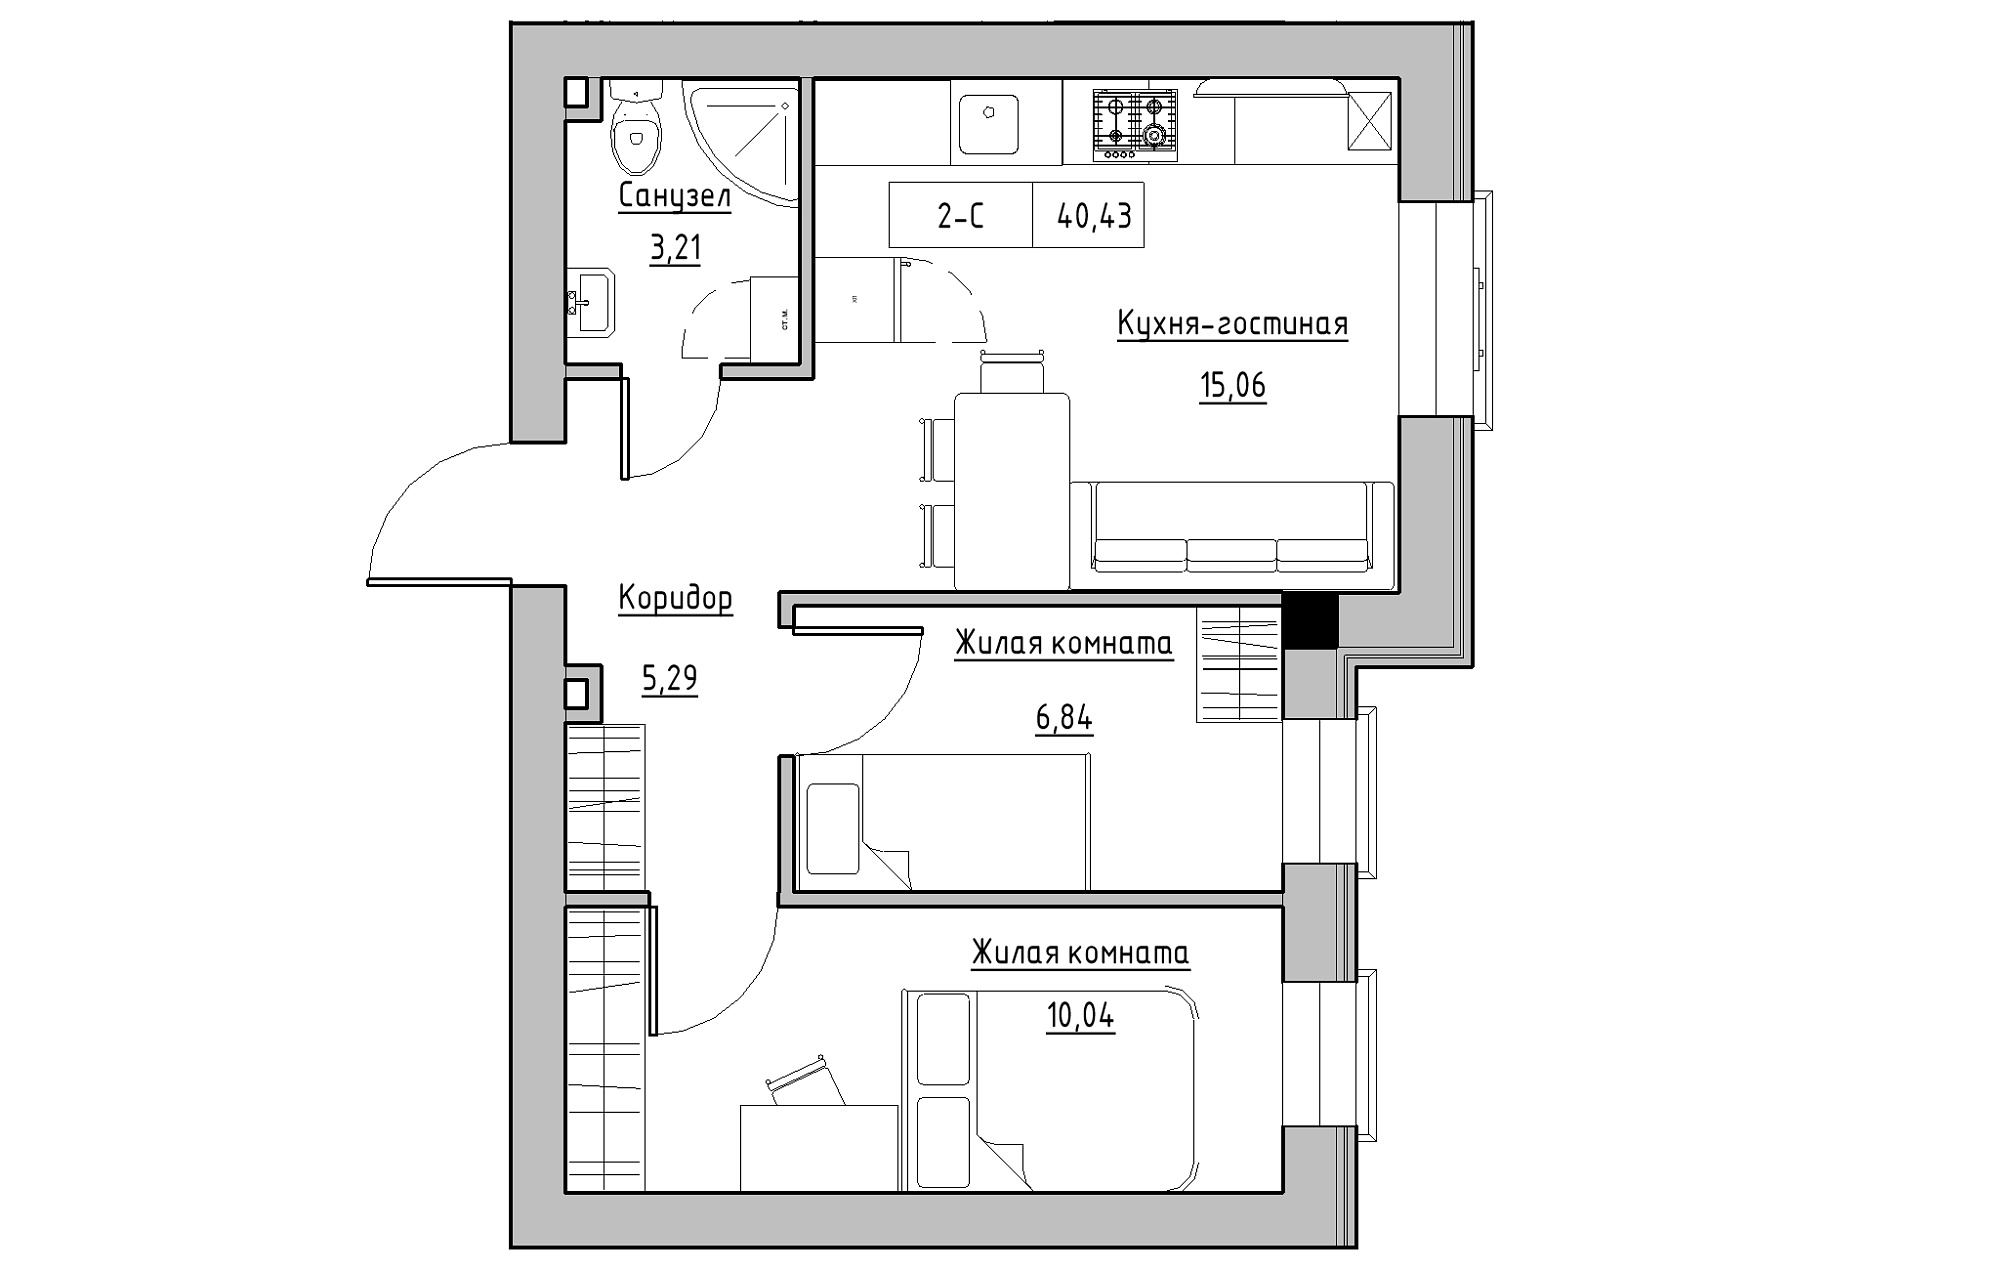 Planning 2-rm flats area 40.43m2, KS-018-01/0010.